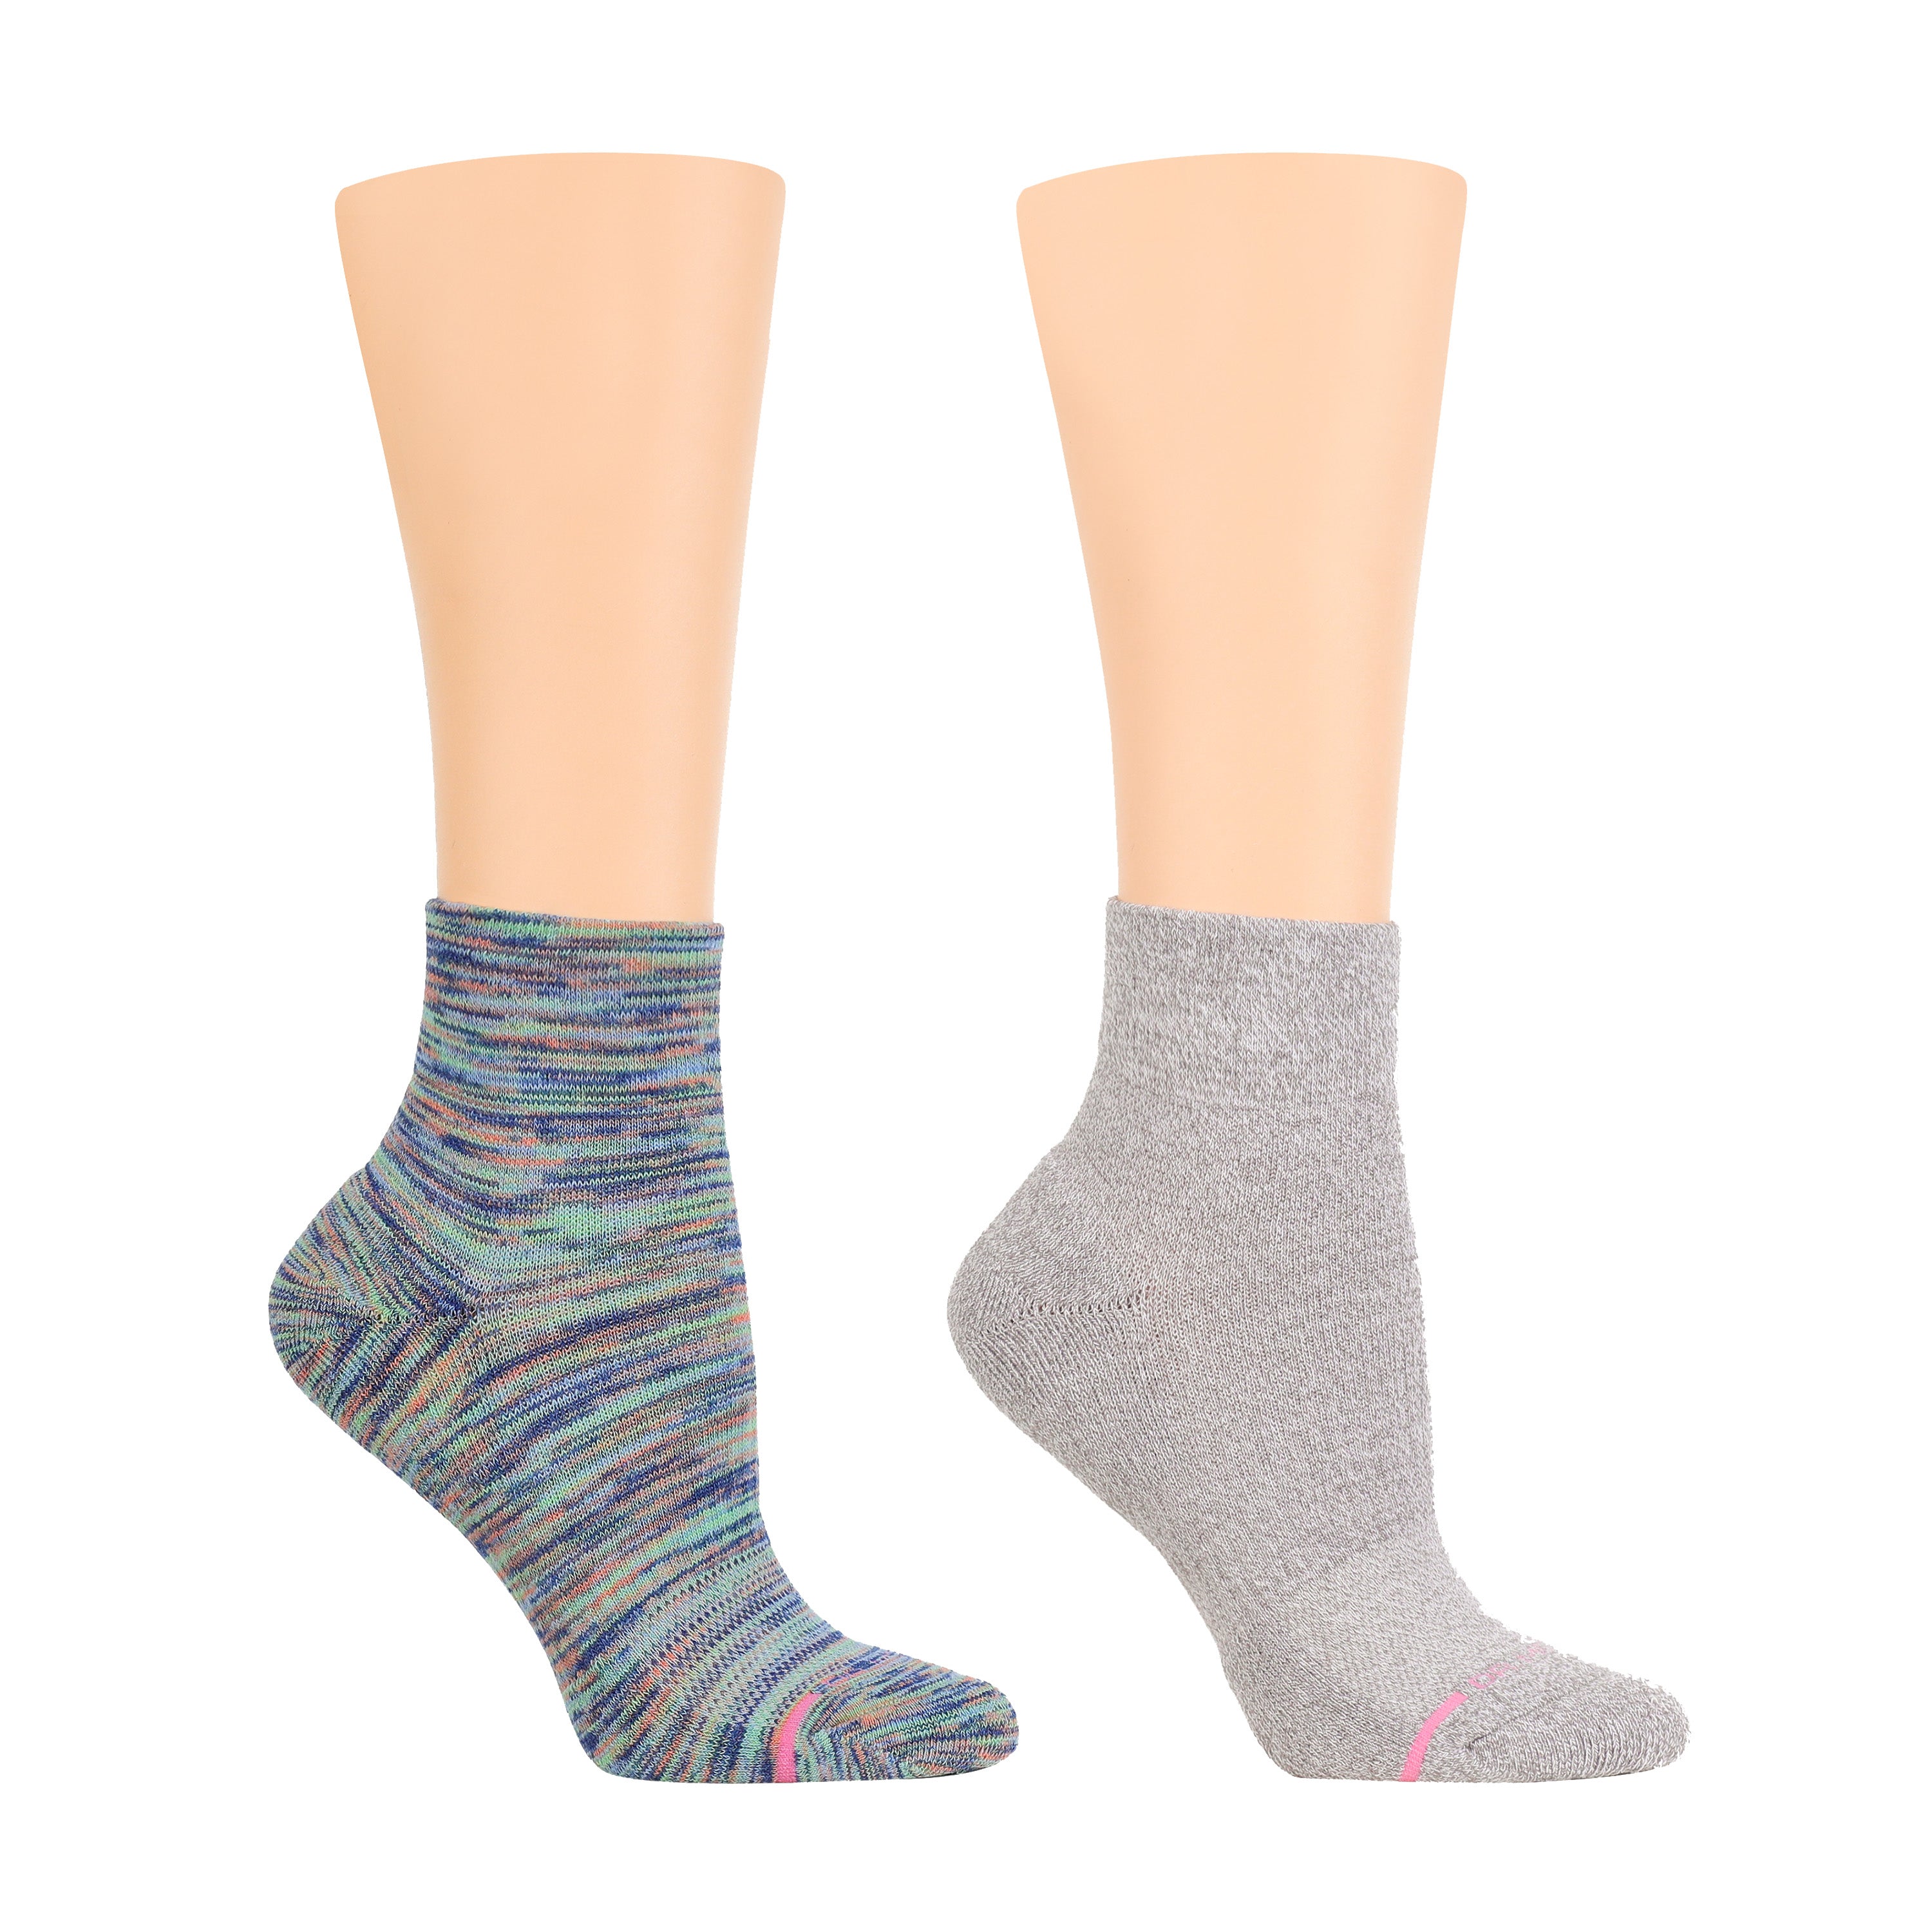 Spacedye | Quarter Compression Socks For Women